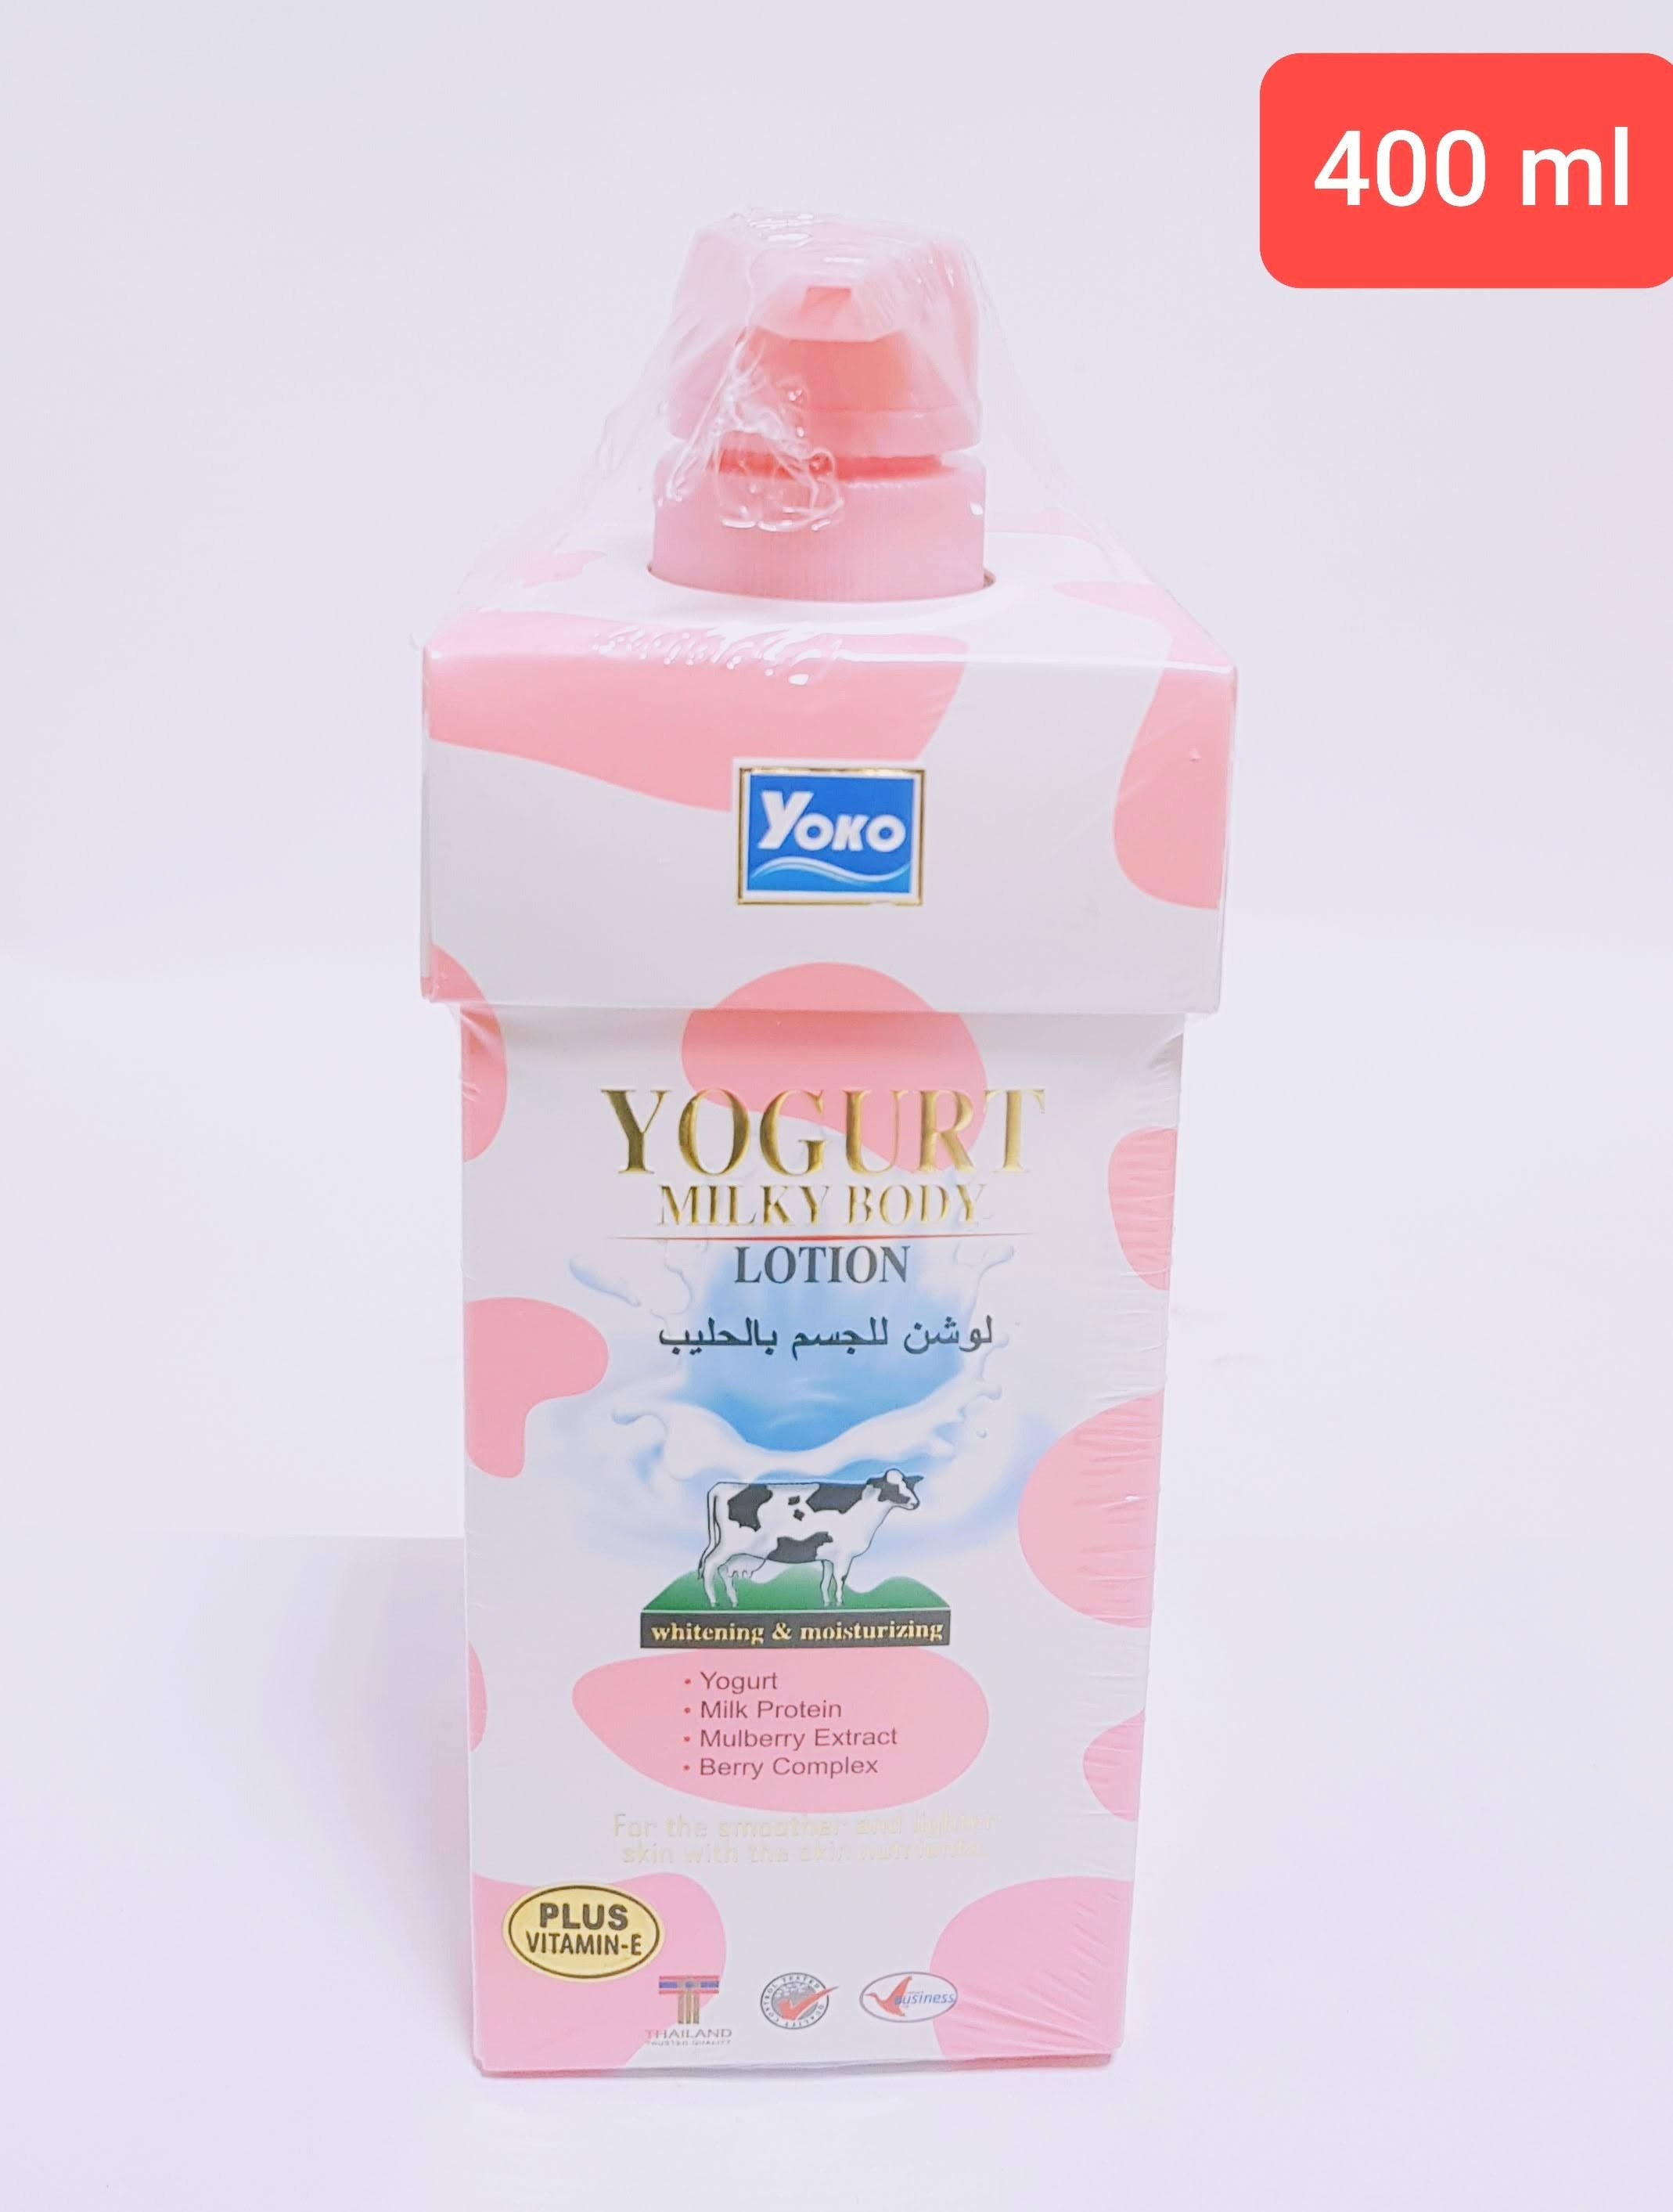 YOKO Milk and Yogurt Body Lotion, 400 ml (Cargo)